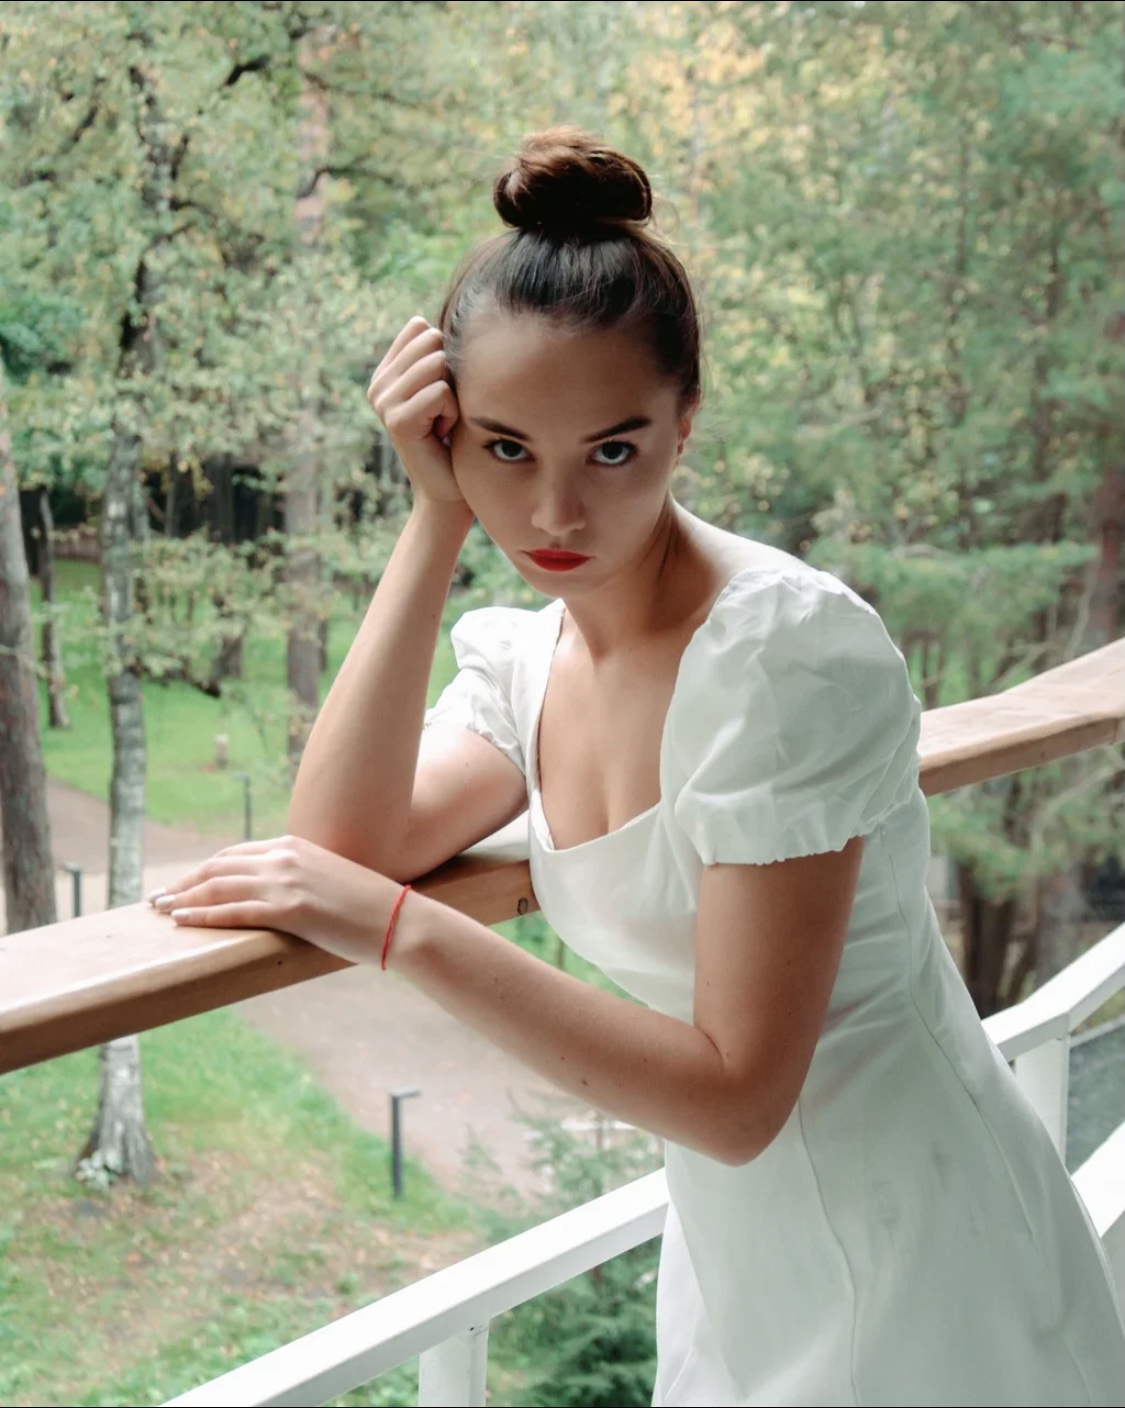 Актриса Юлия Сорокина: Я сама росла в спальном районе, я вовсе не принцесса